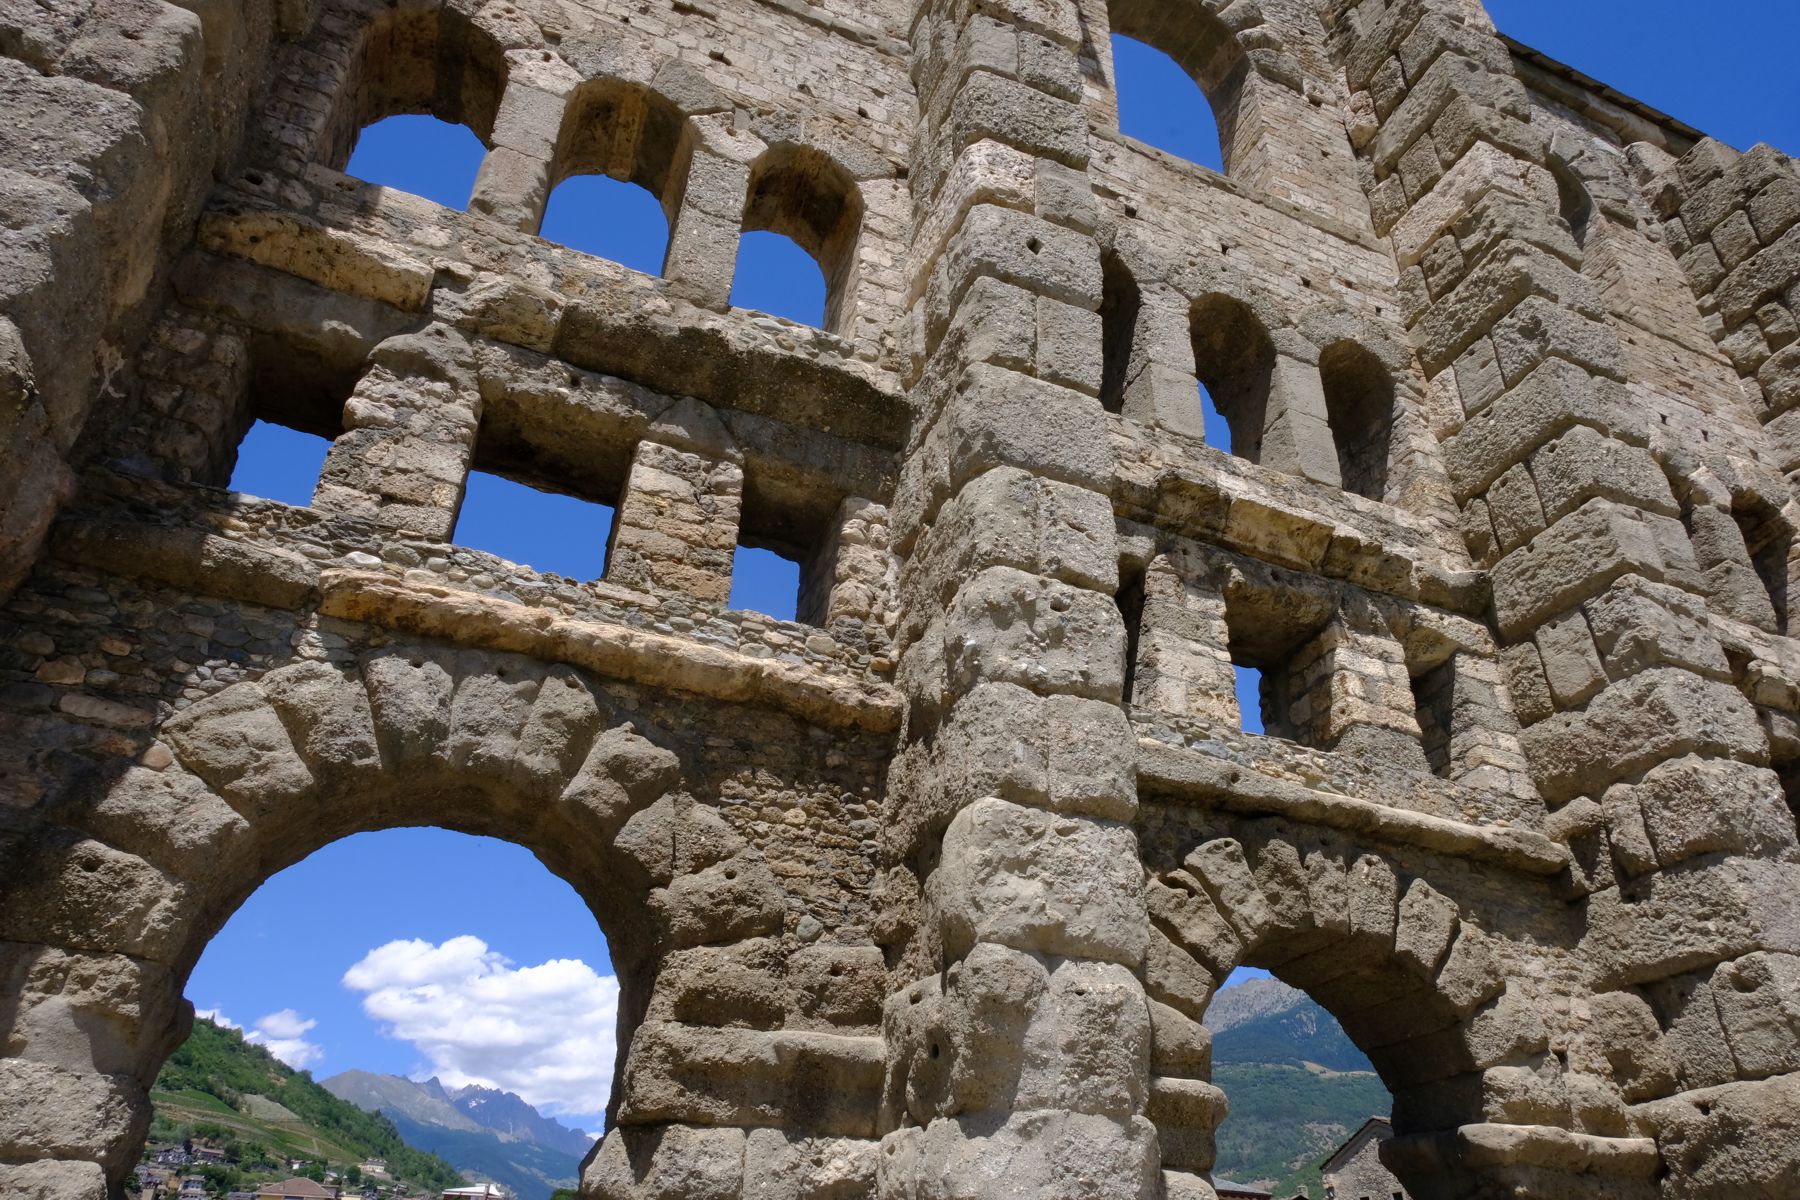 Roman ruins in Aosta